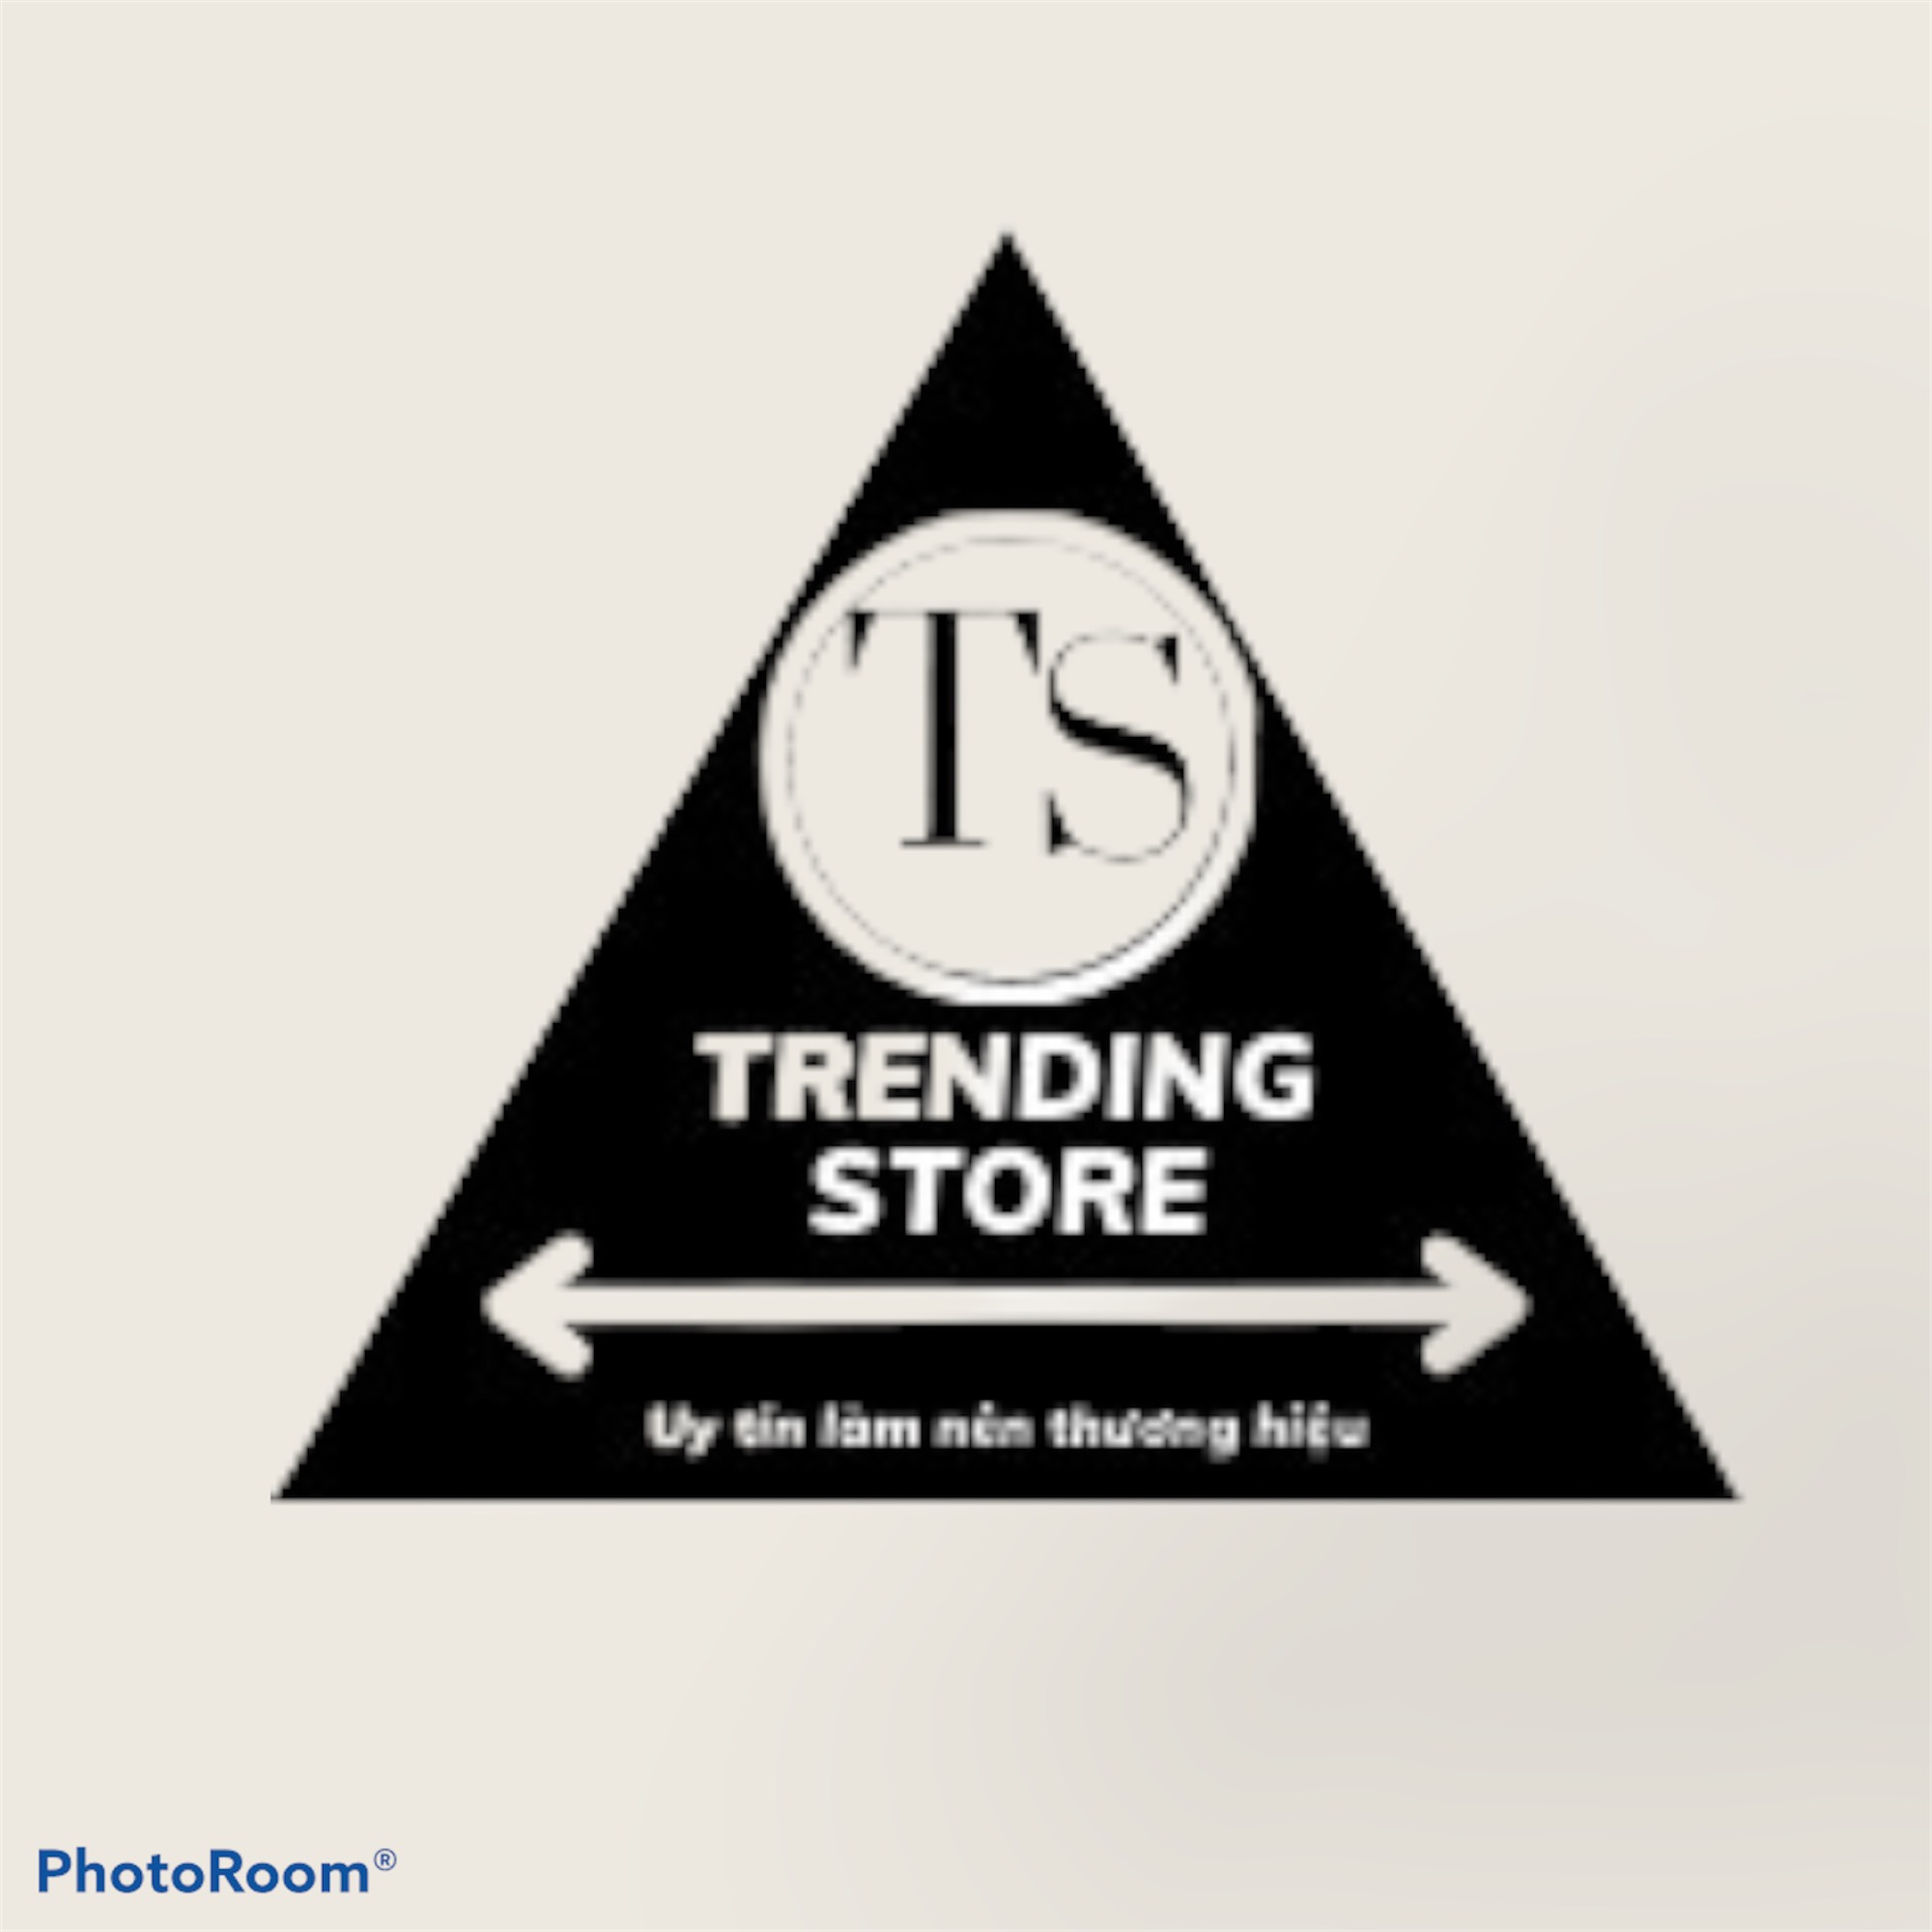 Trending Store